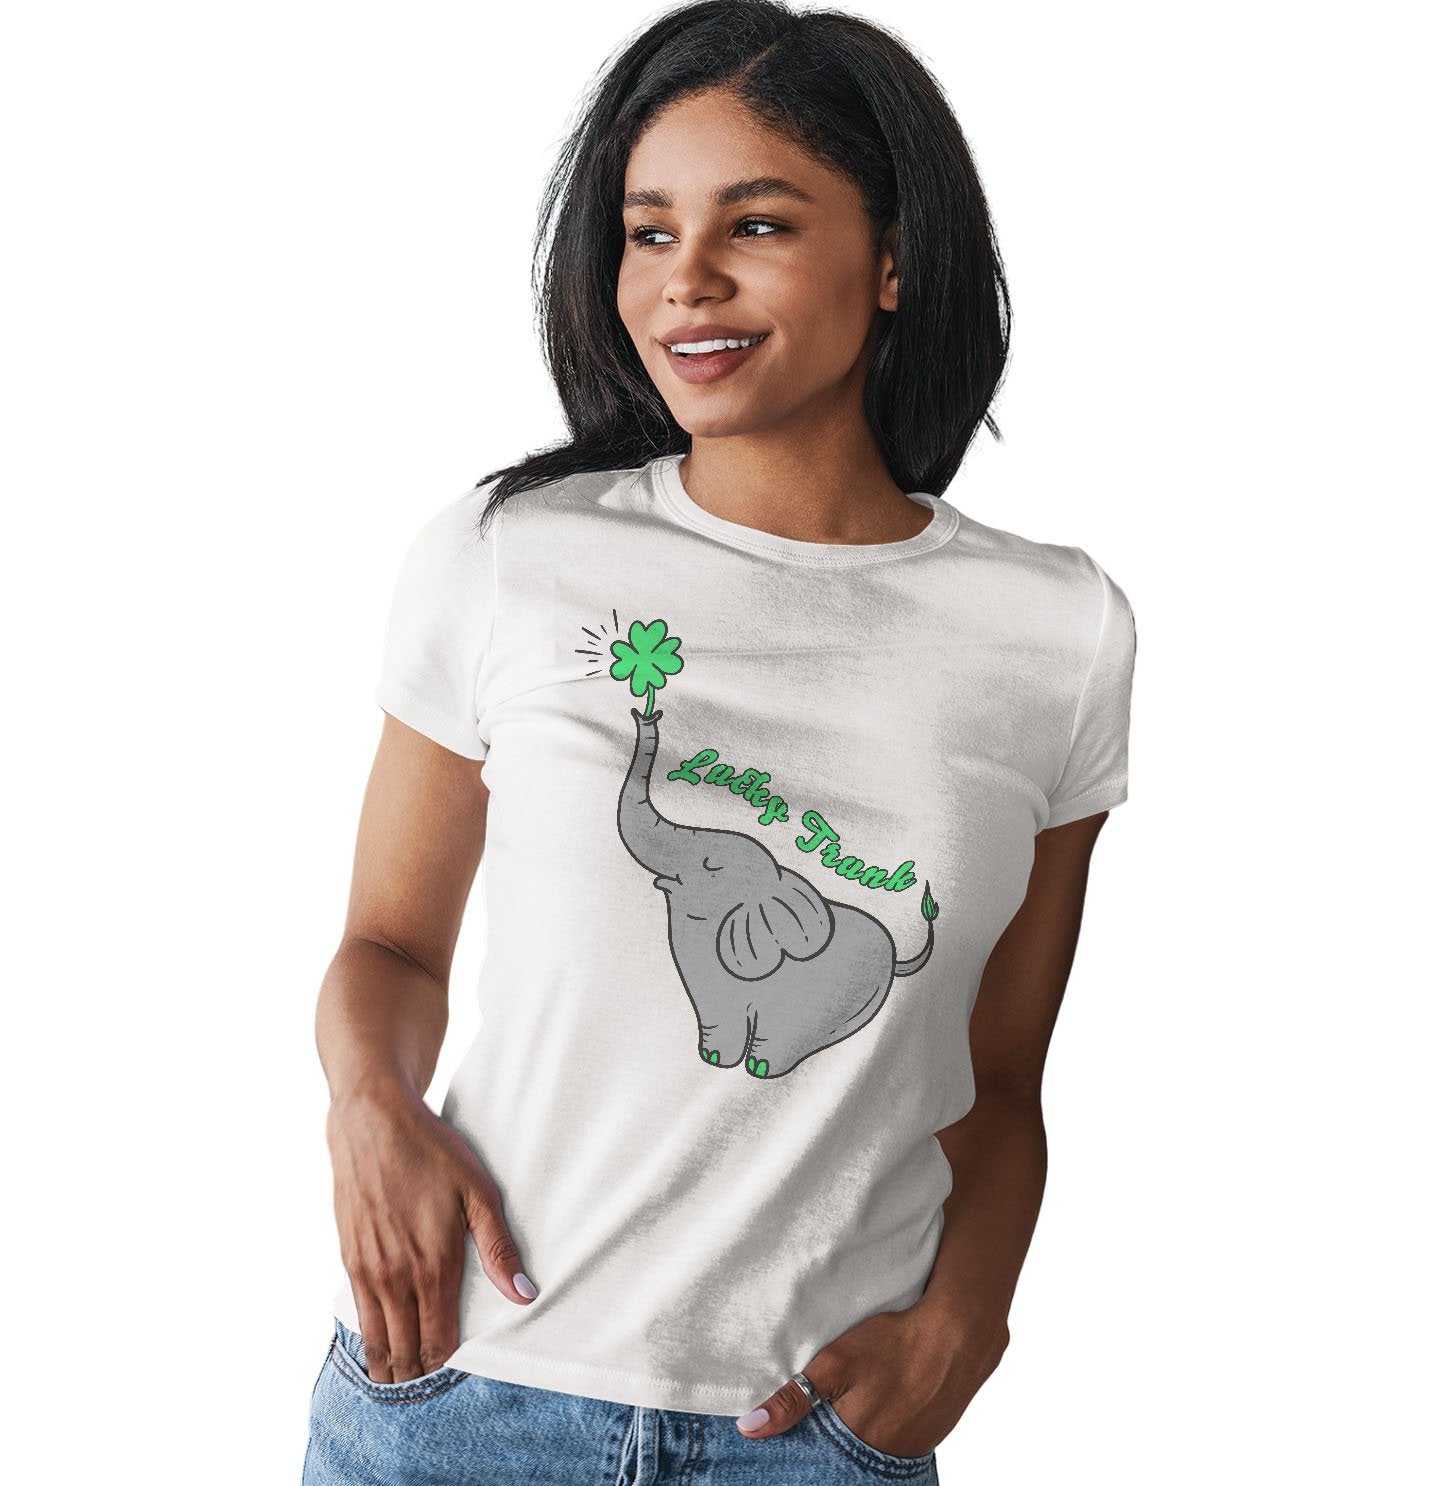 Lucky Trunk - Women's Fitted T-Shirt